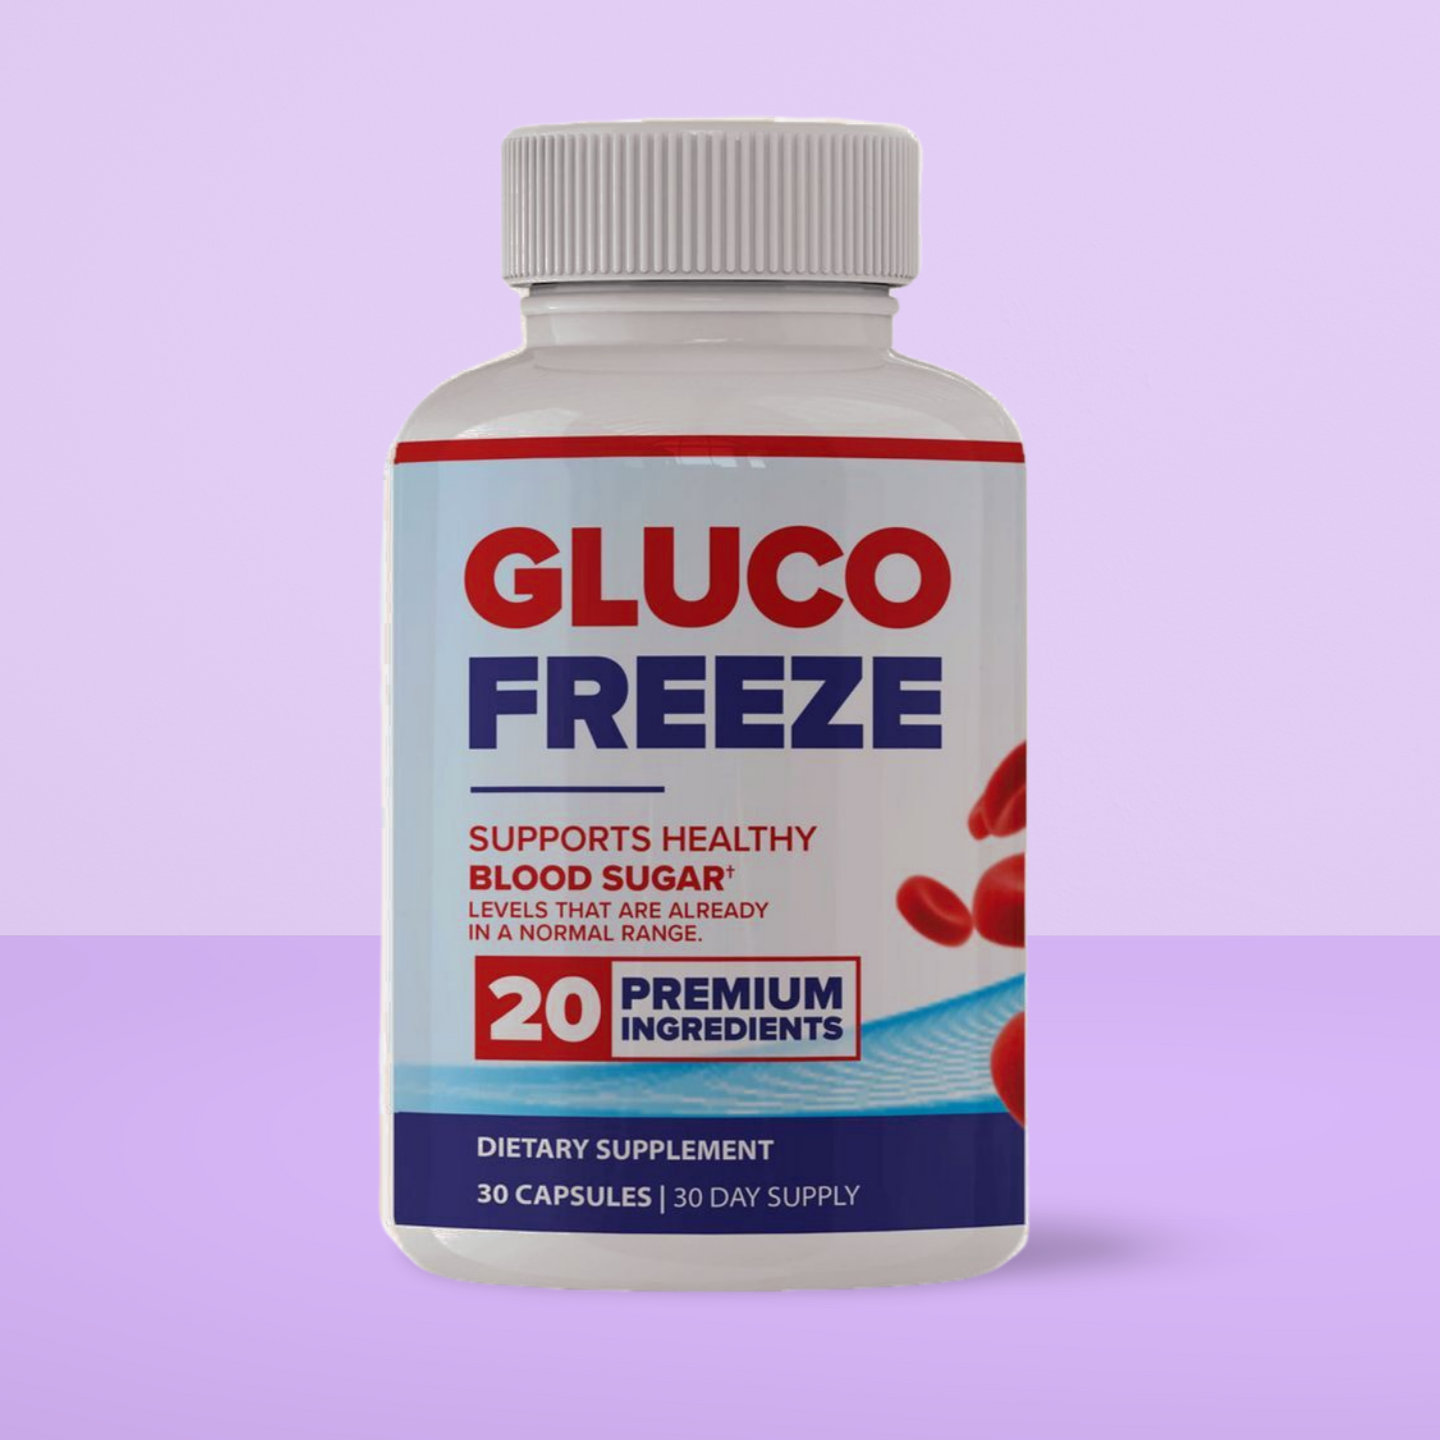 Gluco Freeze